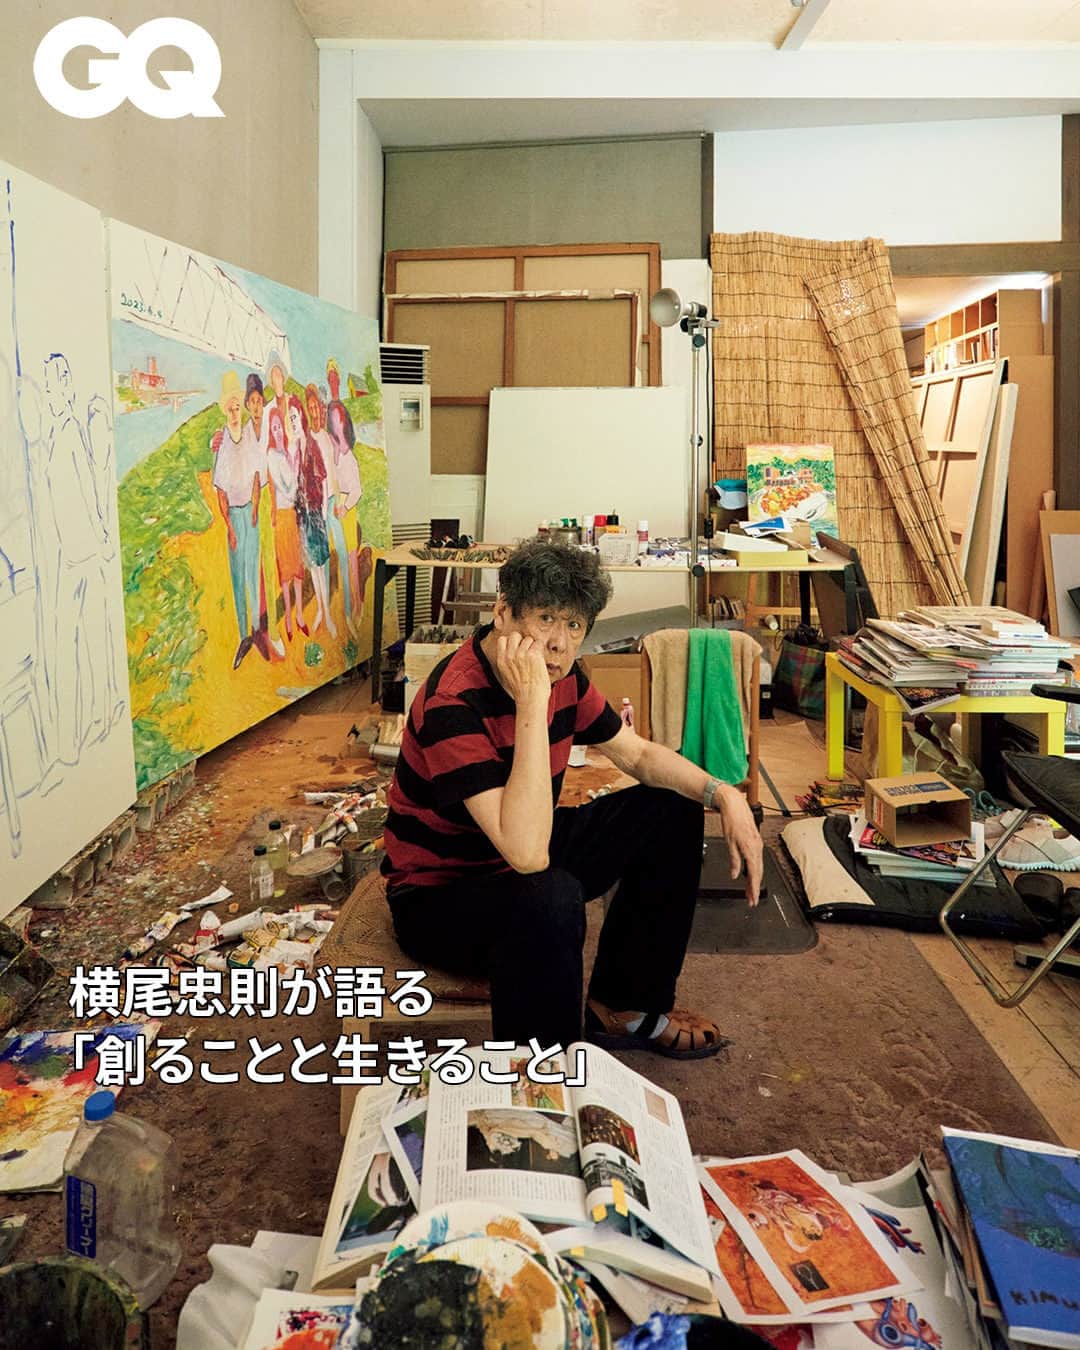 GQ JAPANのインスタグラム：「美術家・横尾忠則の大規模な個展が開かれている。およそ1年半で102点もの新作を描きあげた御大にその創作と生活について聞くため世田谷のアトリエを訪ねた。  @gqjapan プロフィールのリンクから記事を✓  #横尾忠則 #tadanoriyokoo #art  PHOTOGRAPHS BY KENSHU SHINTSUBO WORDS BY CHIE SUMIYOSHI EDITED BY KEITA TAKADA (GQ)」